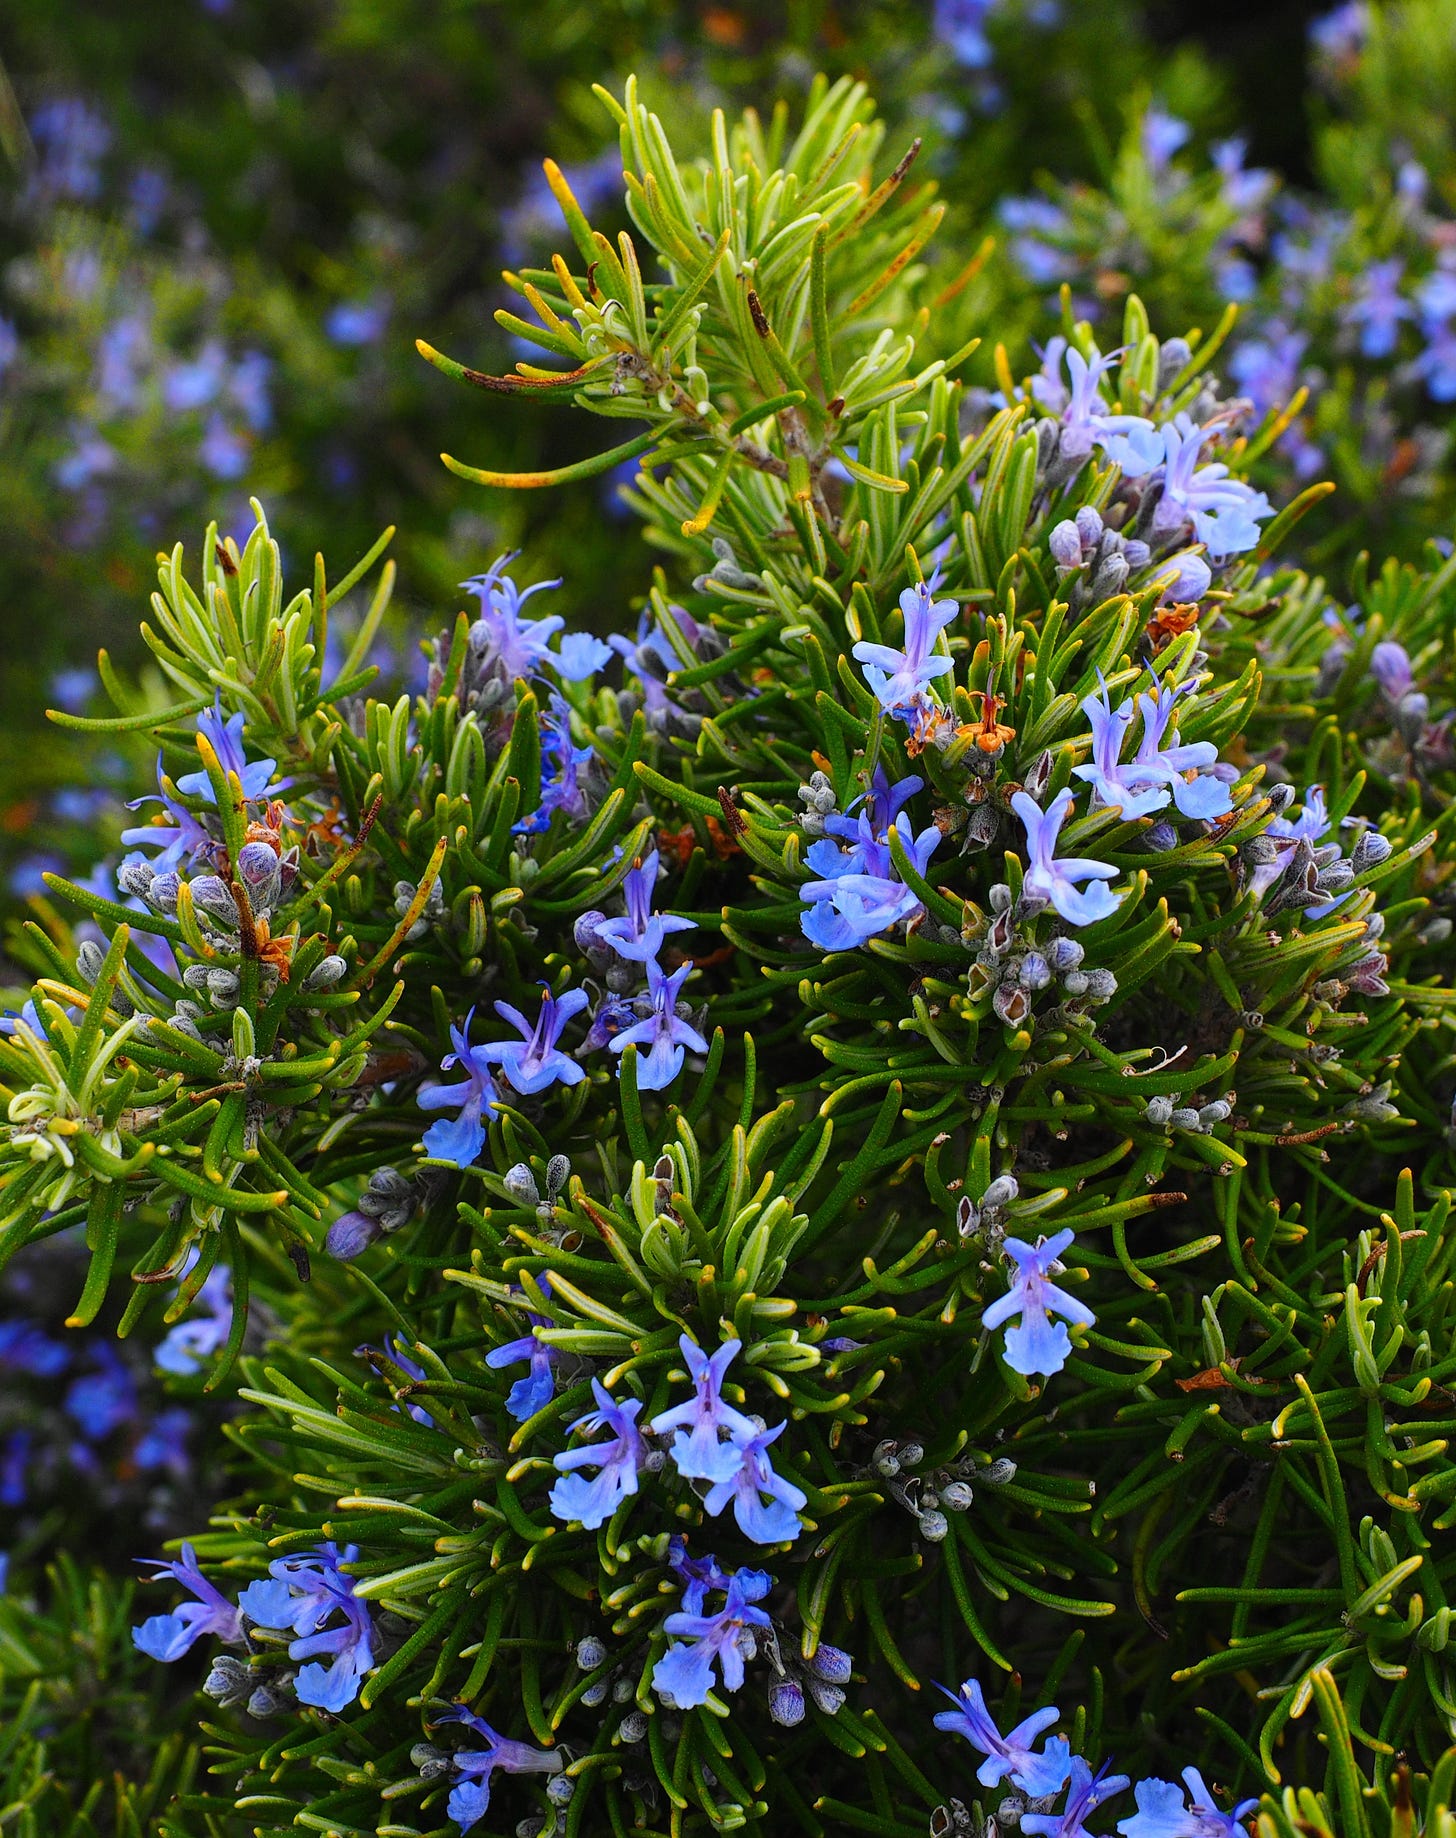 Hans (2015). Rosemary blossoms [photography]. https://pixabay.com/photos/rosemary-blossoms-blue-violet-1090419/